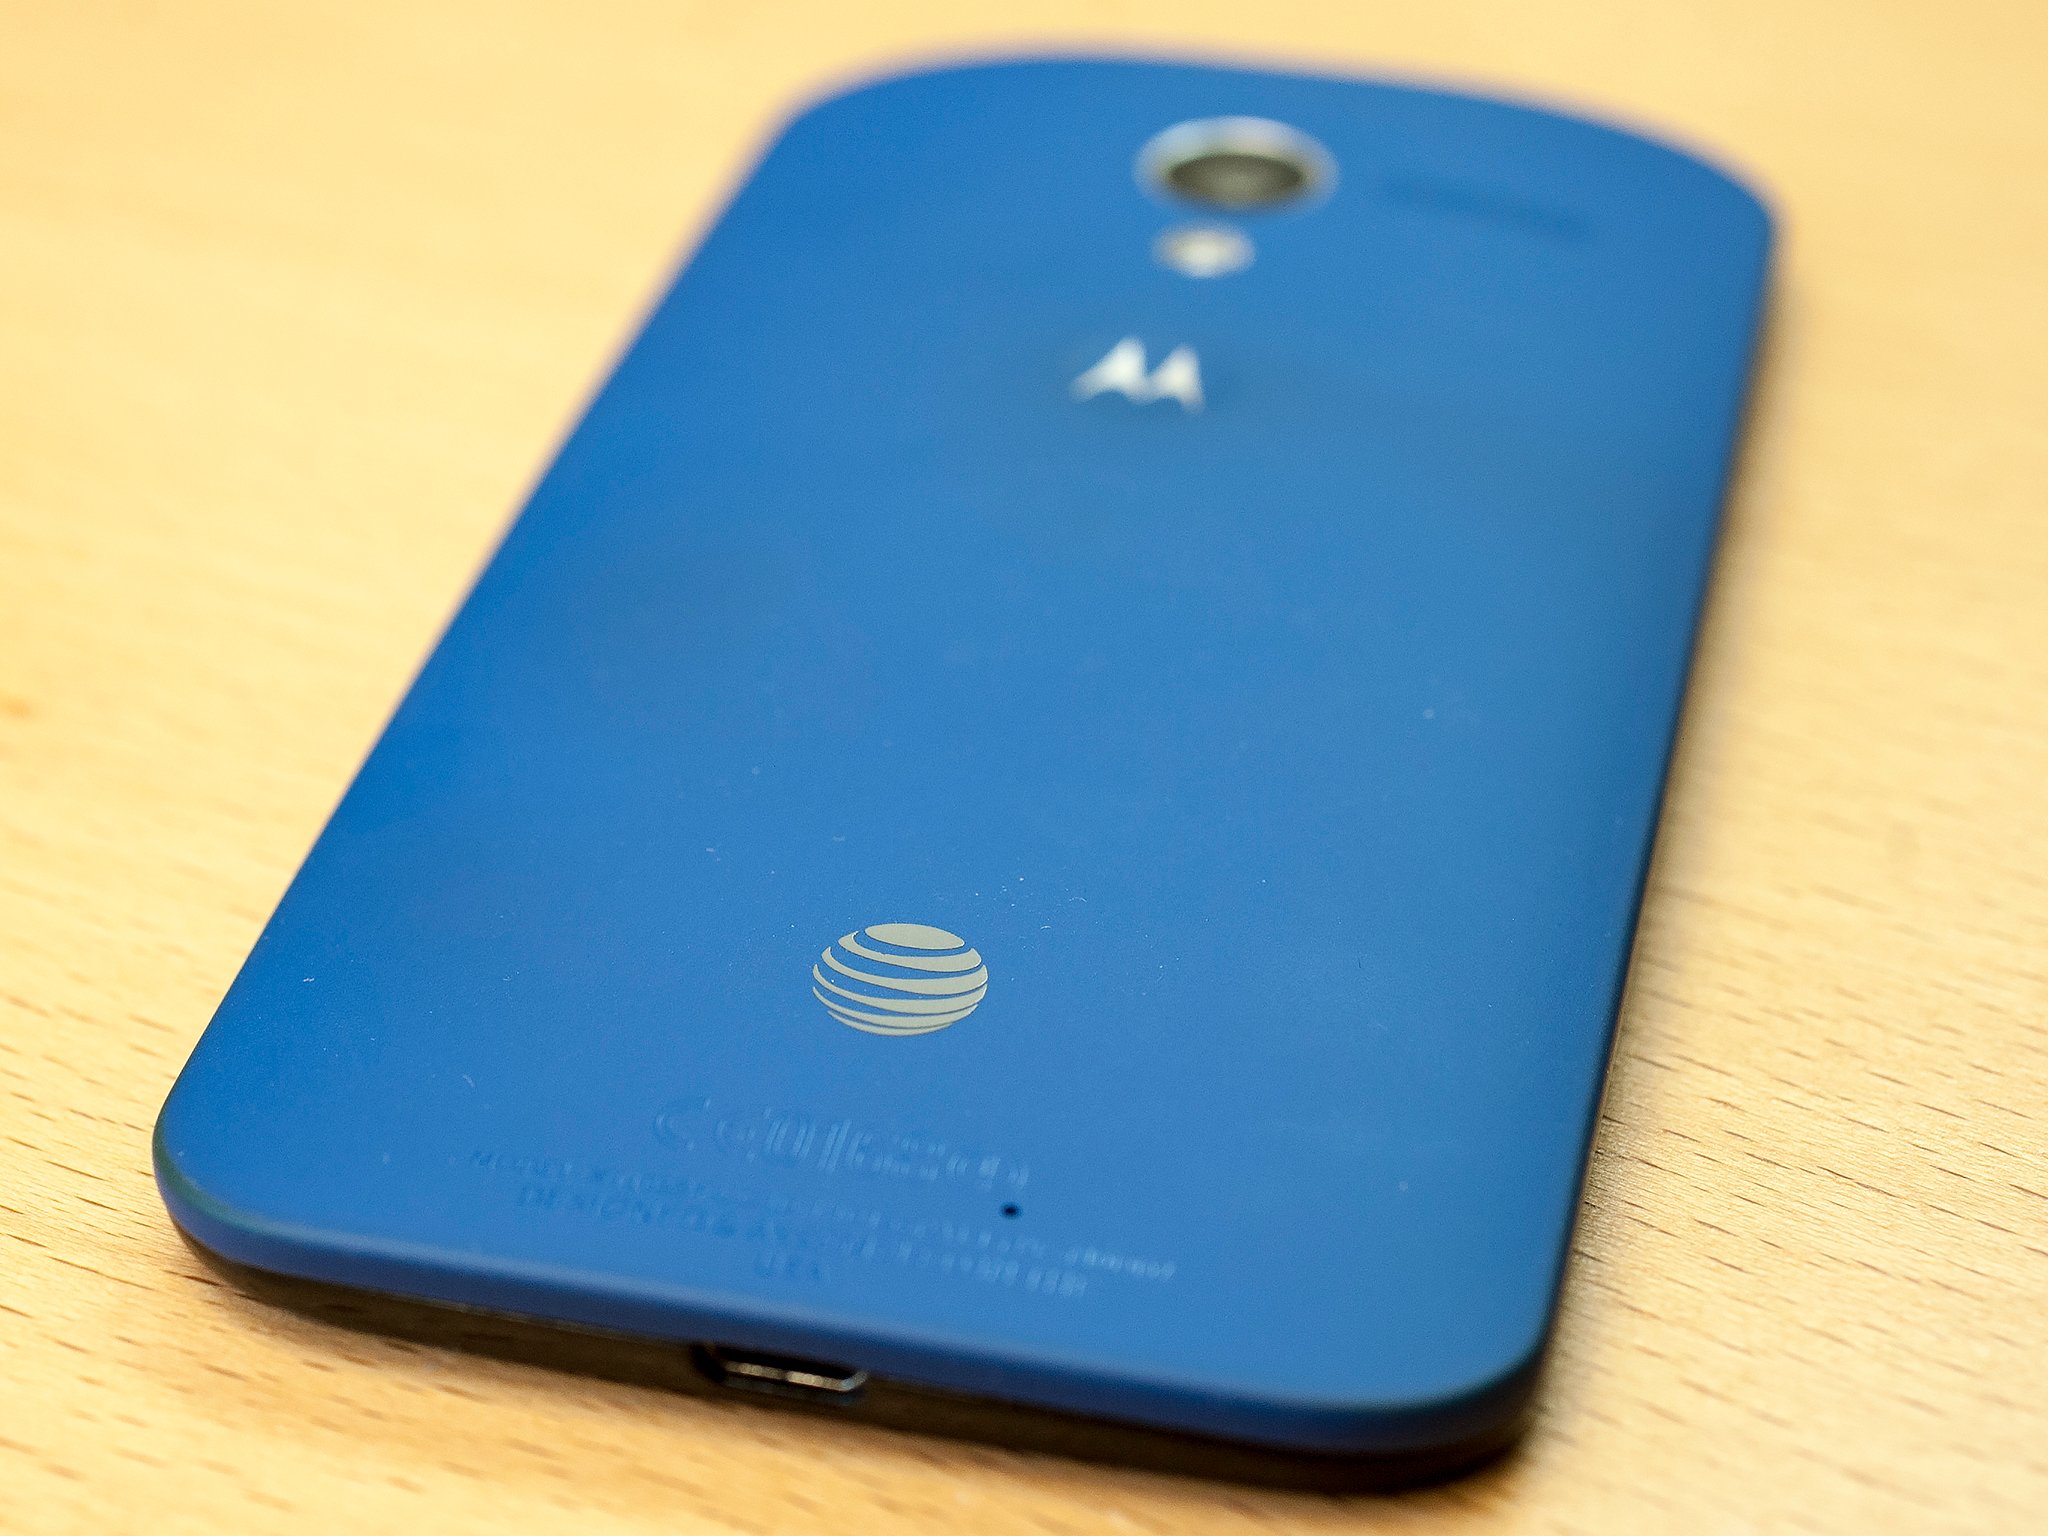 Moto X+1 pops up on Motorola's site again